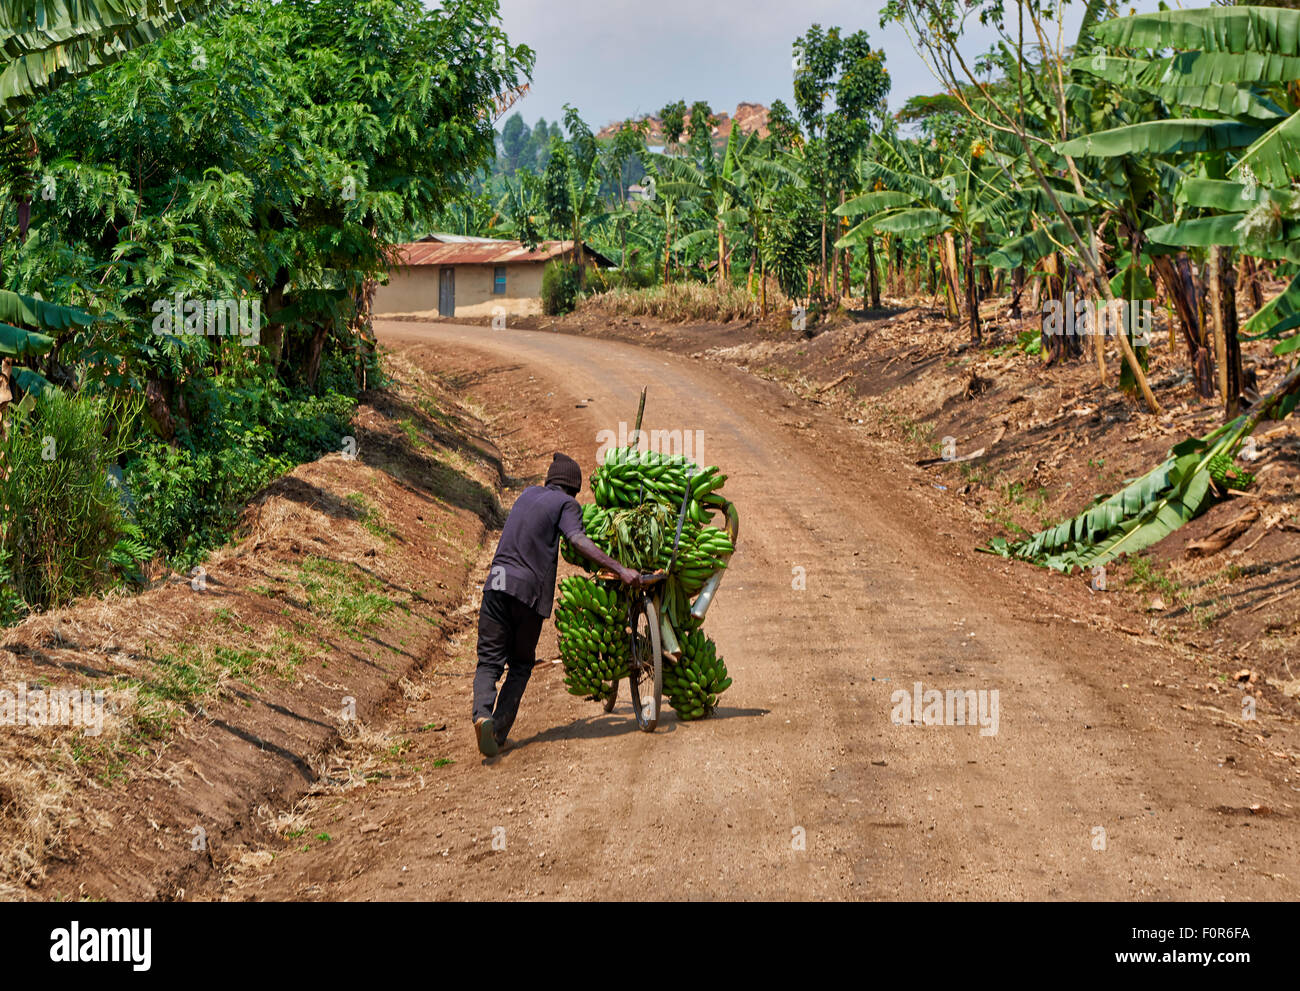 Banane Fahrrad, Kraterseen Bunyaruguru Region, Uganda, Afrika Stockfoto